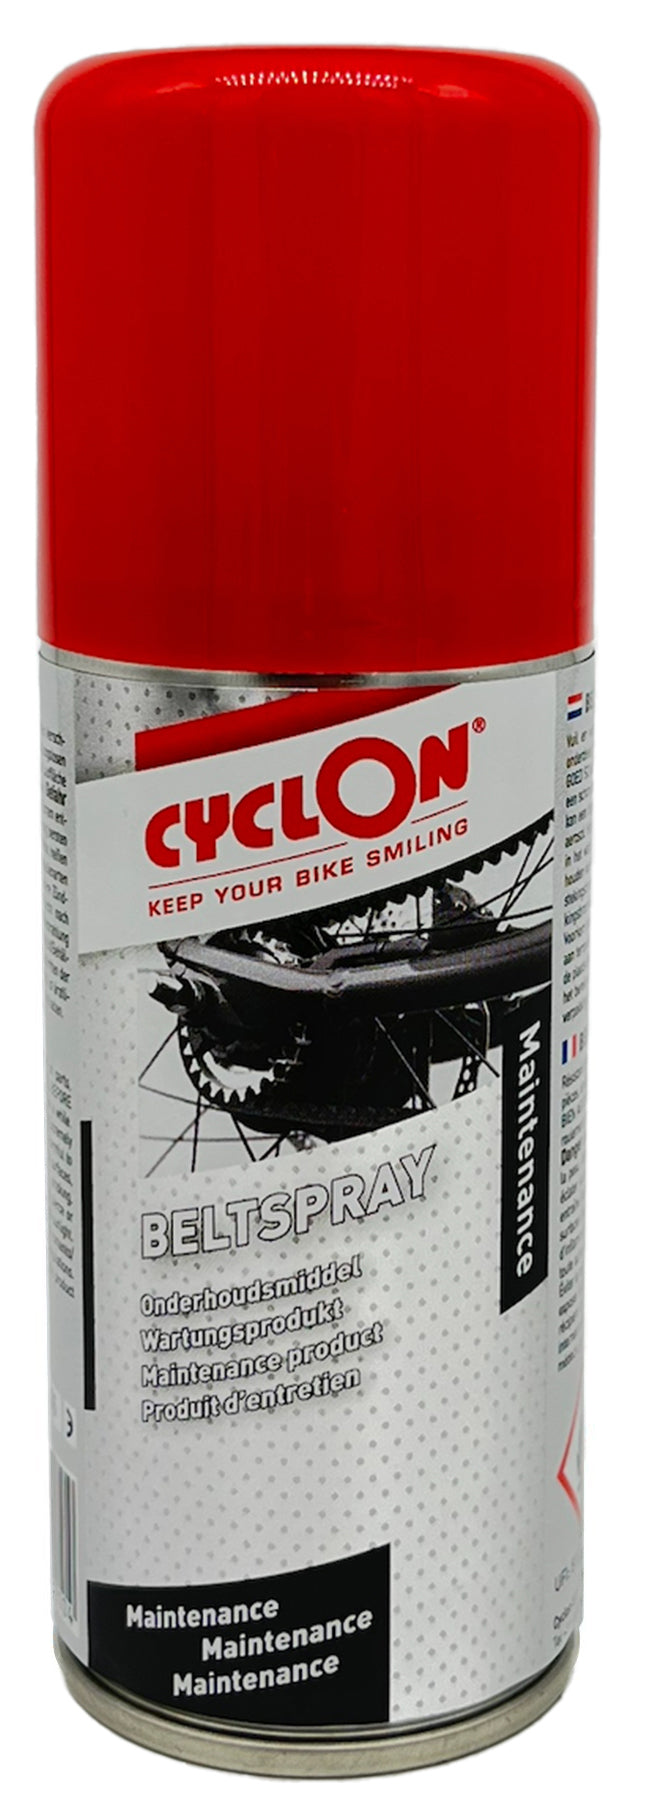 Spray per cintura ciclone 100 ml